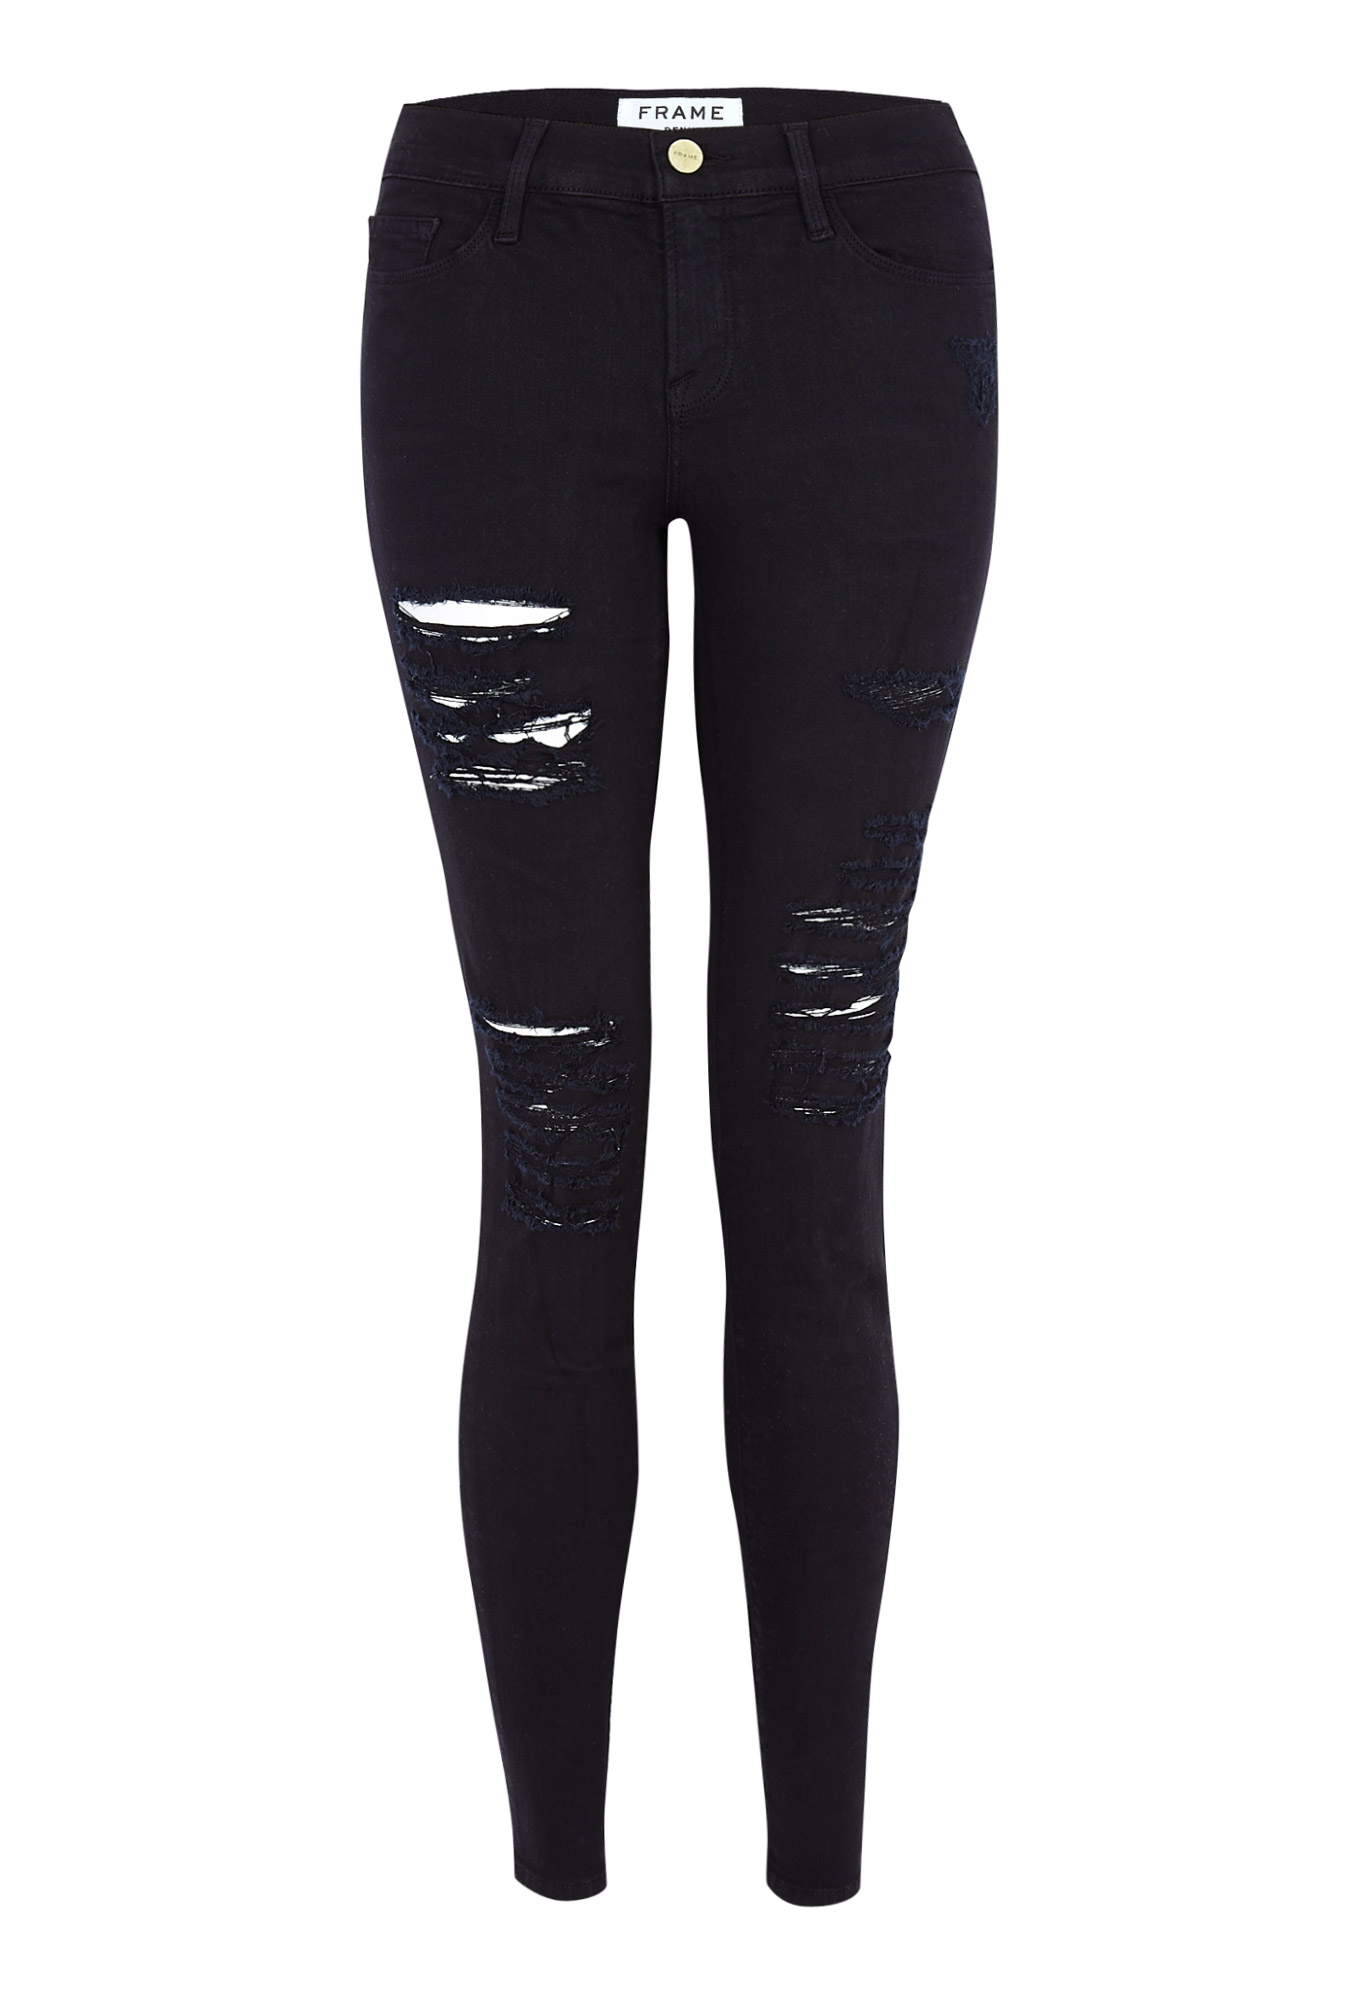 Frame denim Le Color Ripped Skinny Black Jeans in Blue (denim) | Lyst